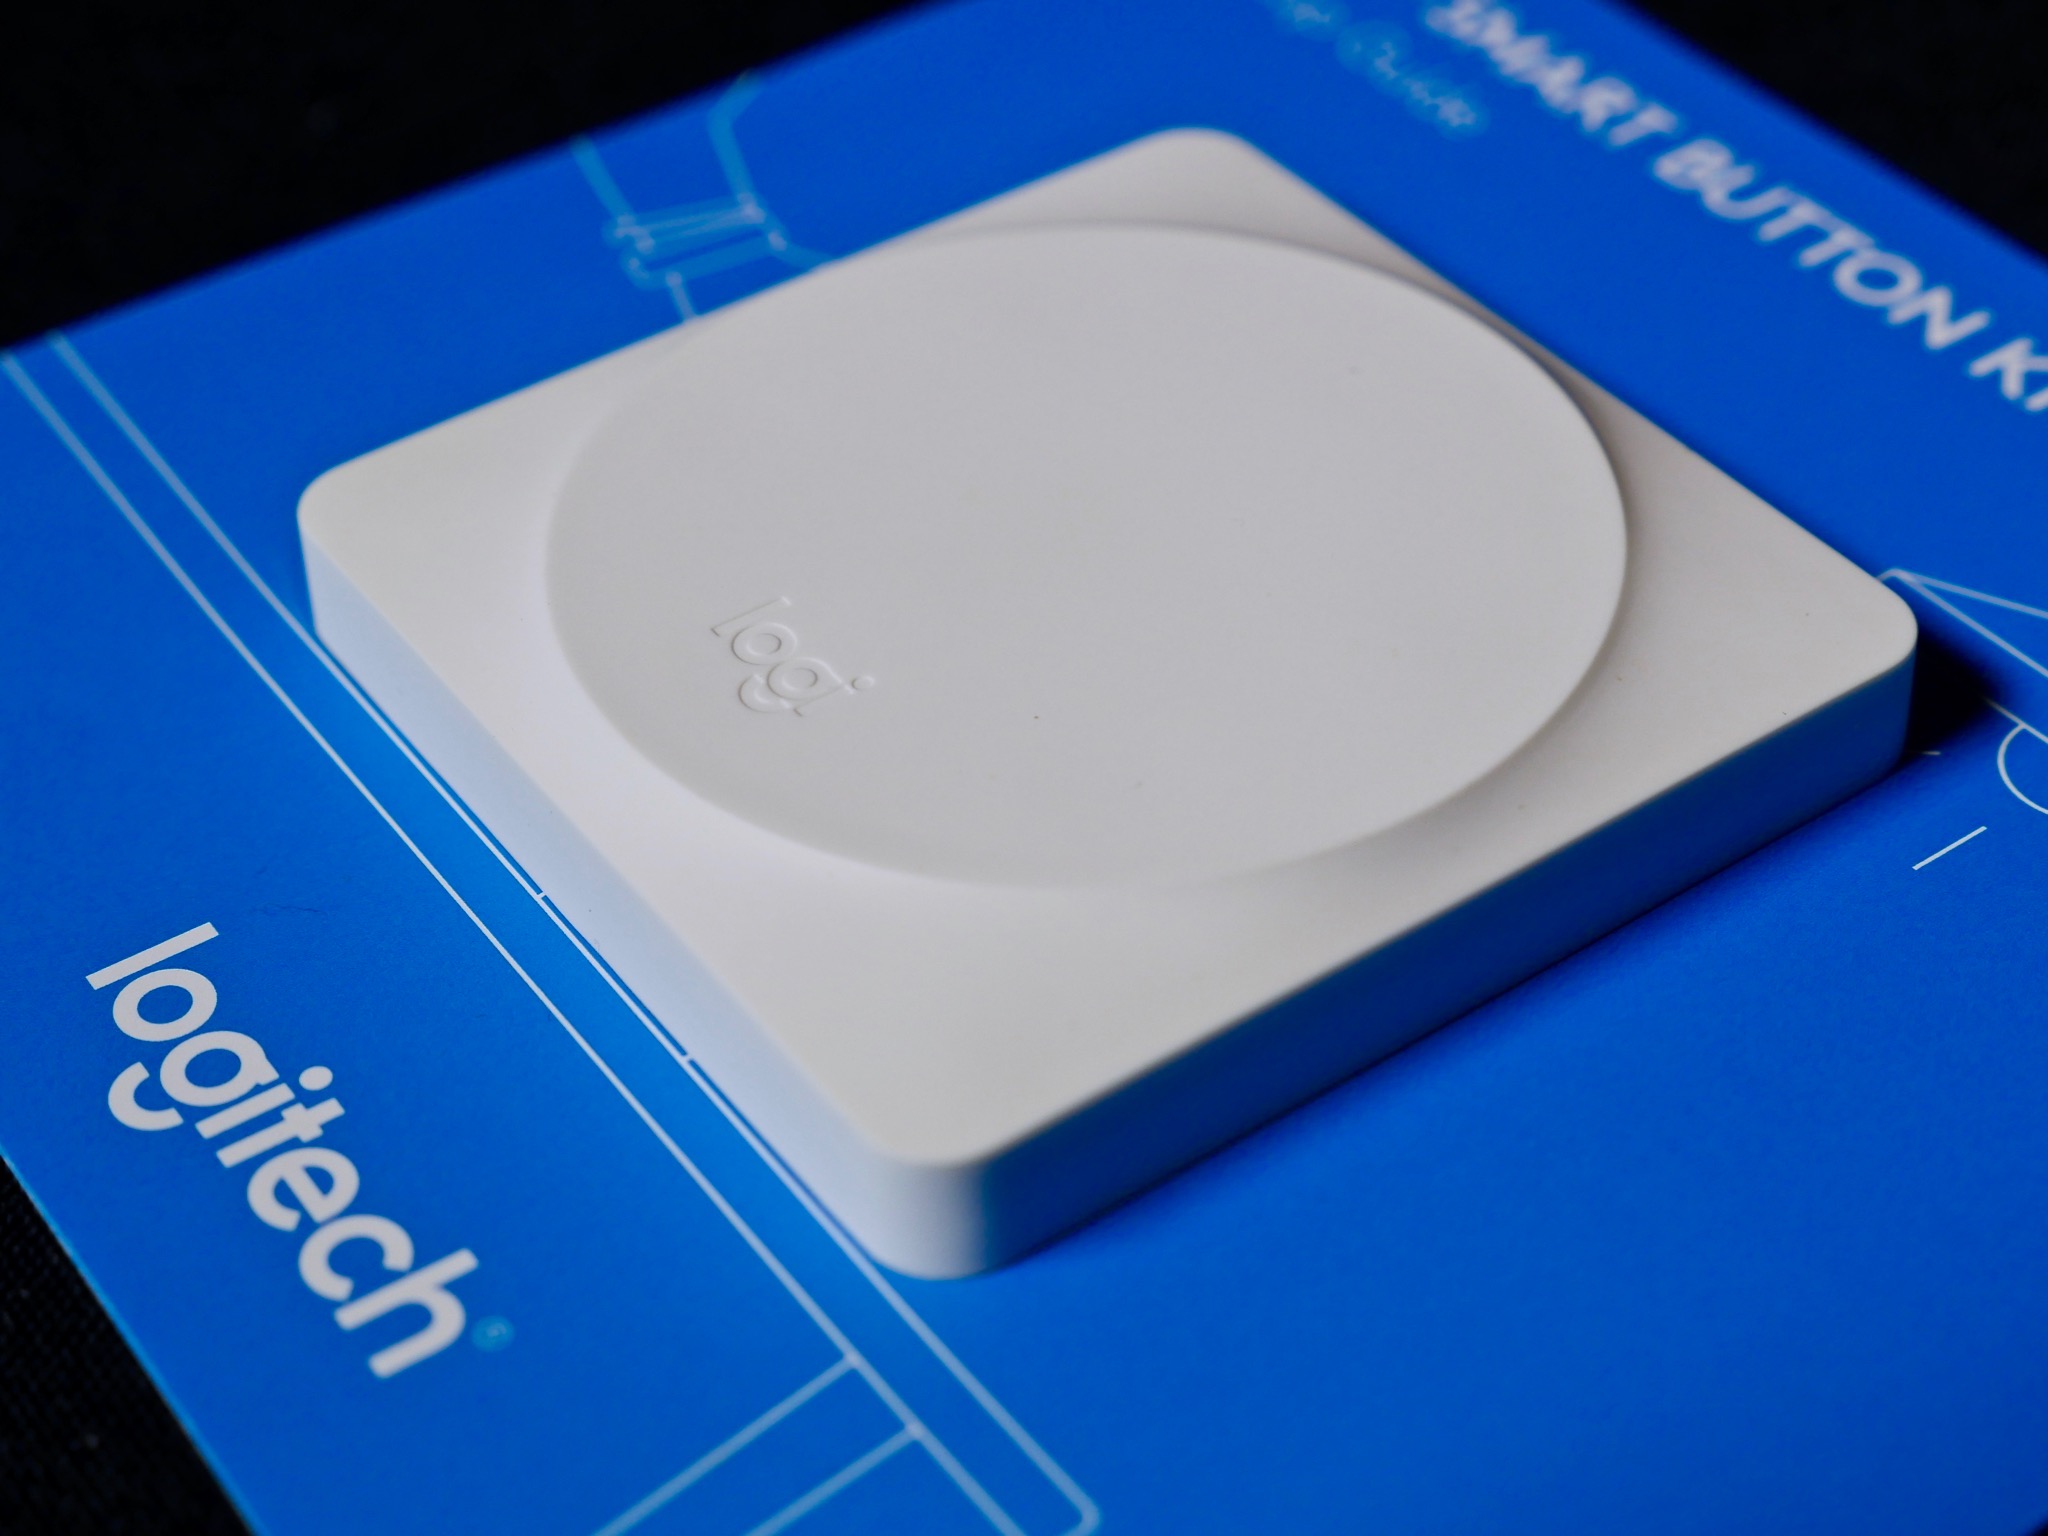 The Logitech POP Smart Button sits atop the blue Setup Guide.